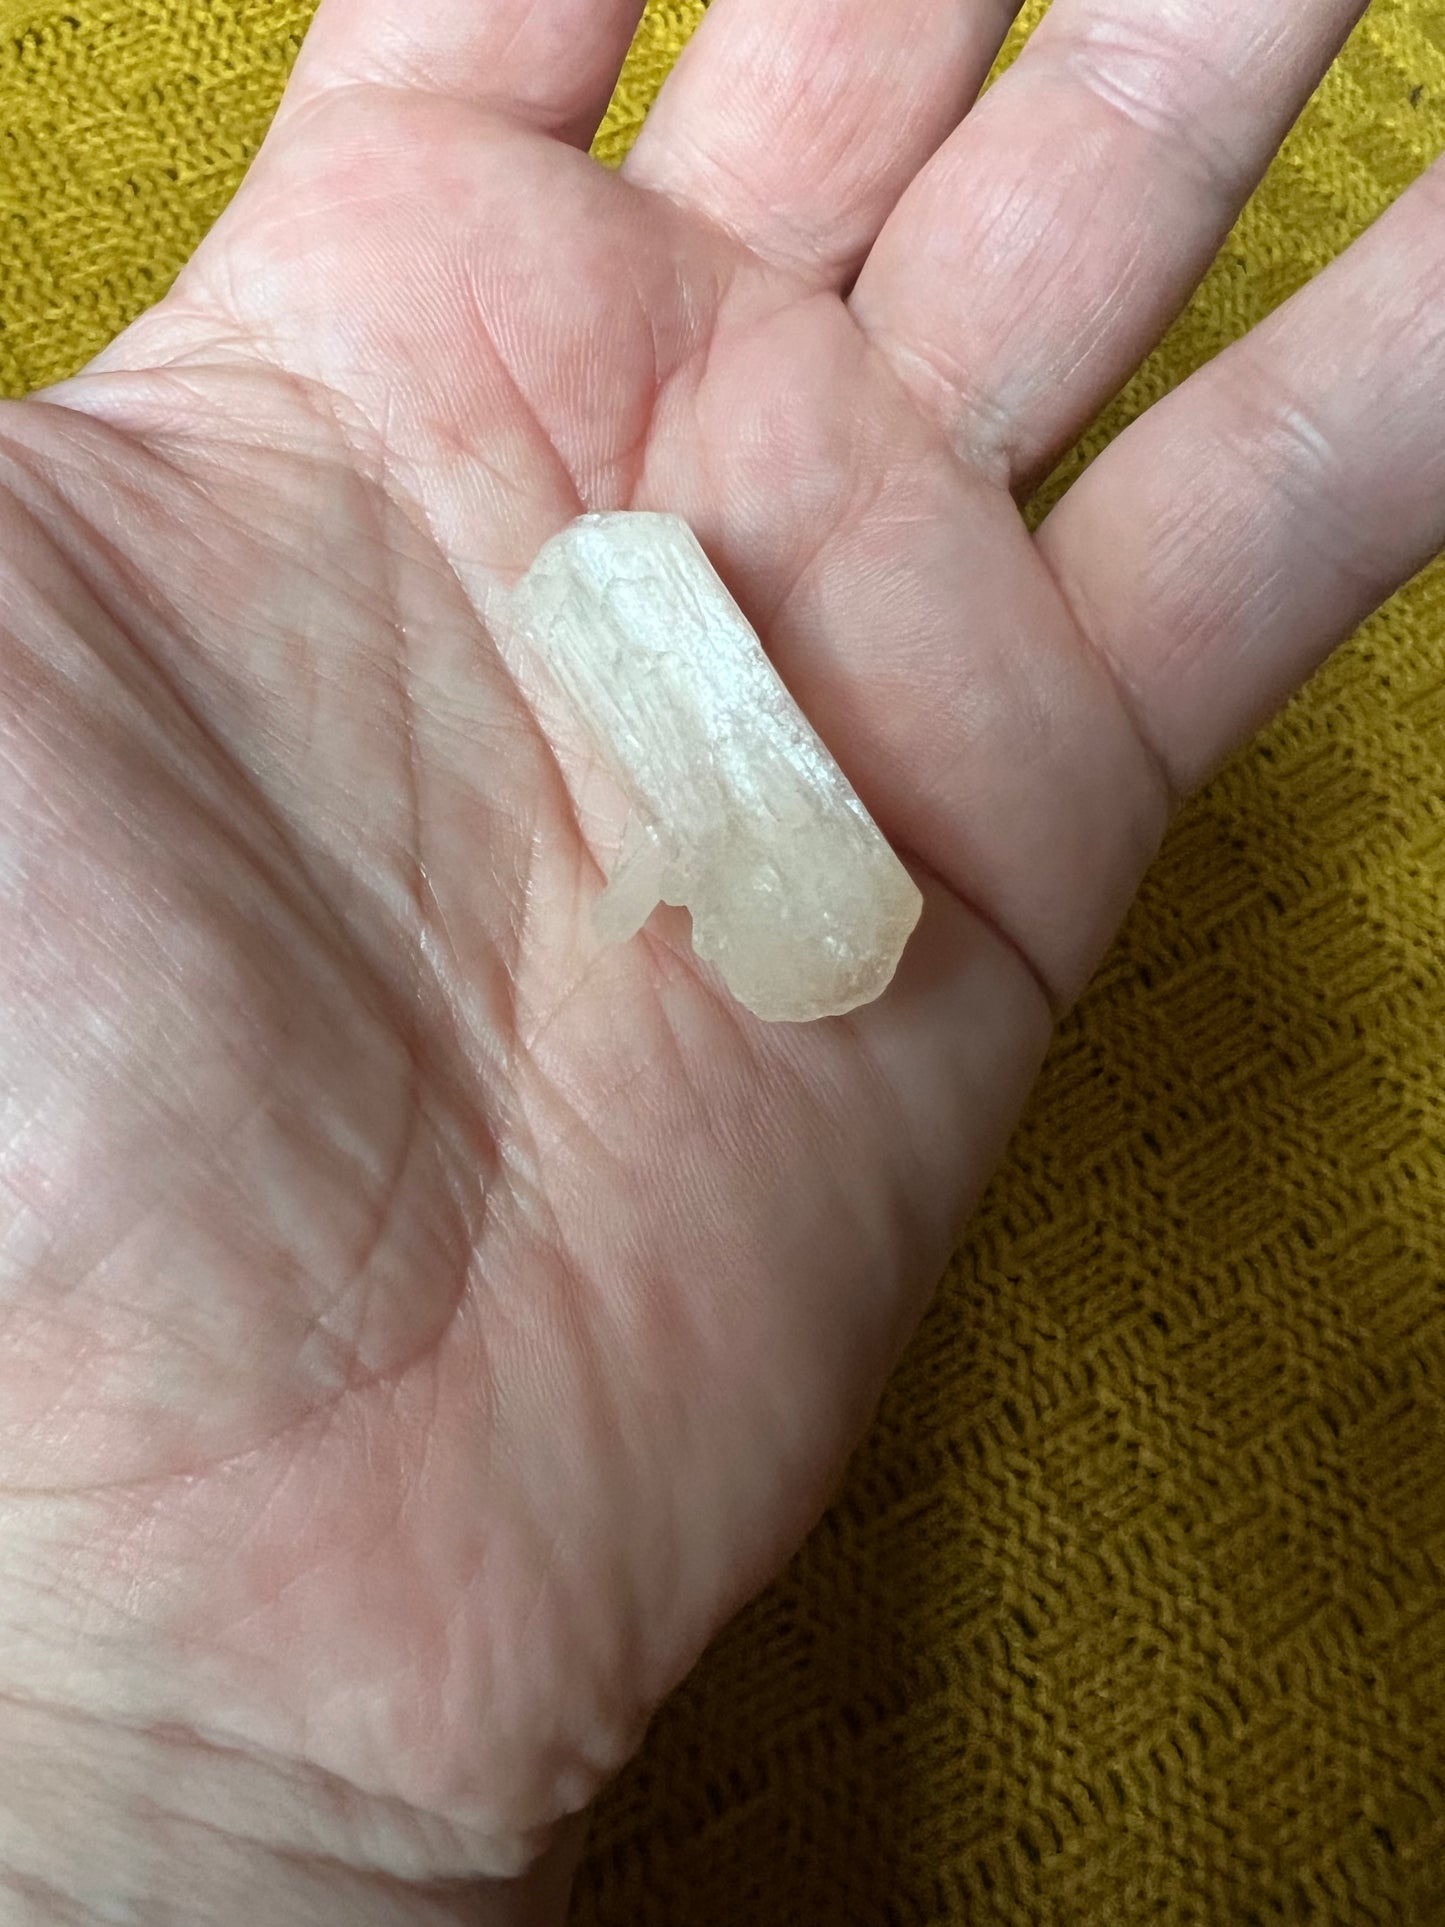 Small Apophyllite with stillbite